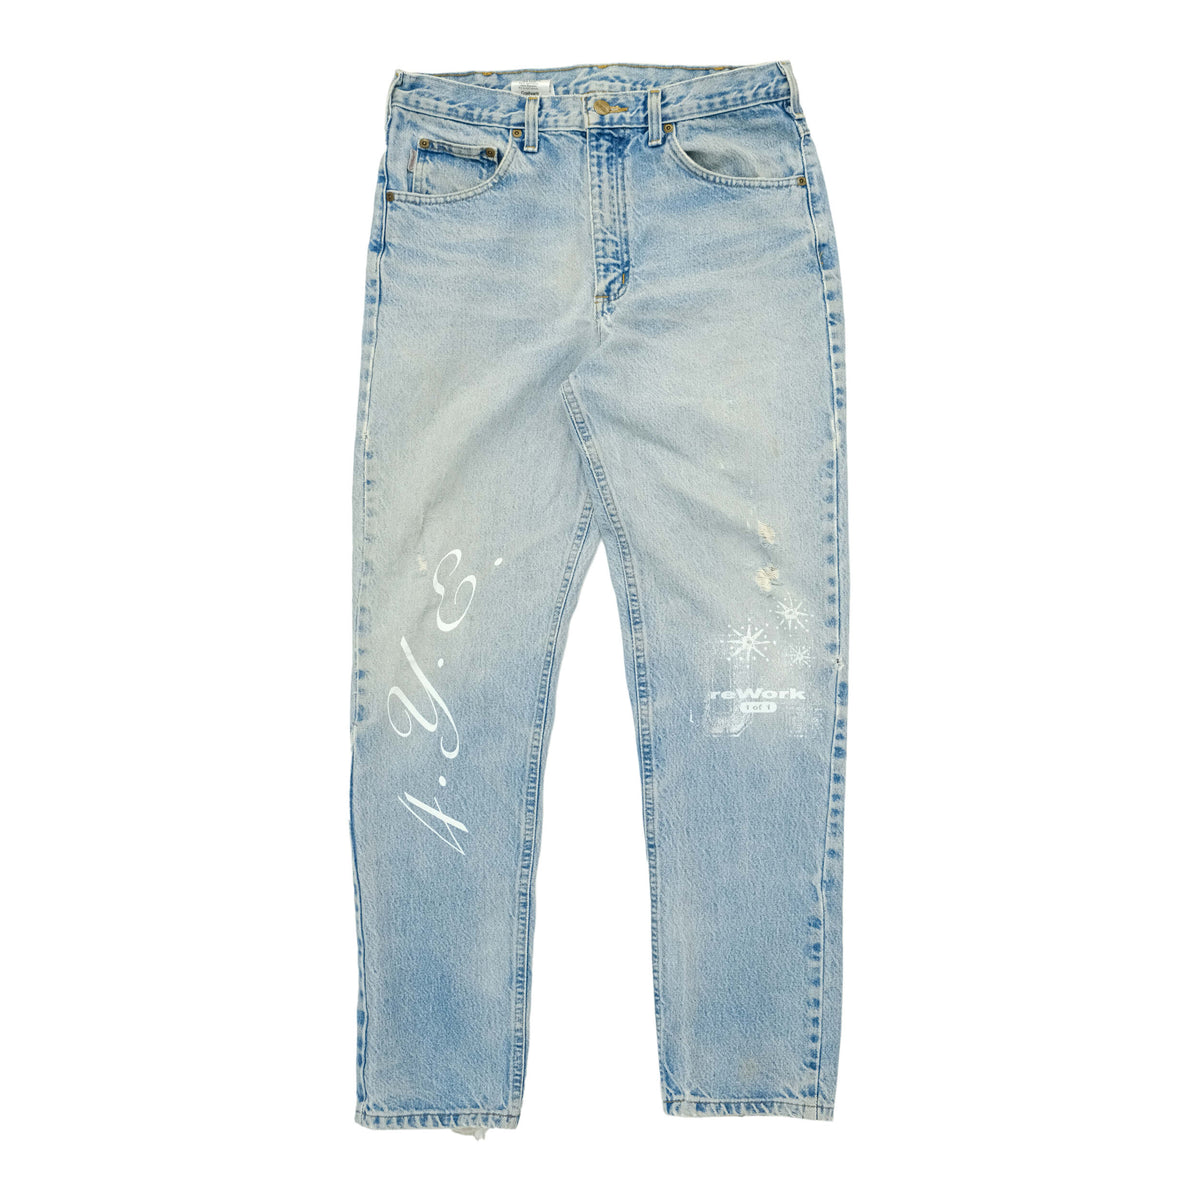 reWork Carhartt Jeans (32x32)